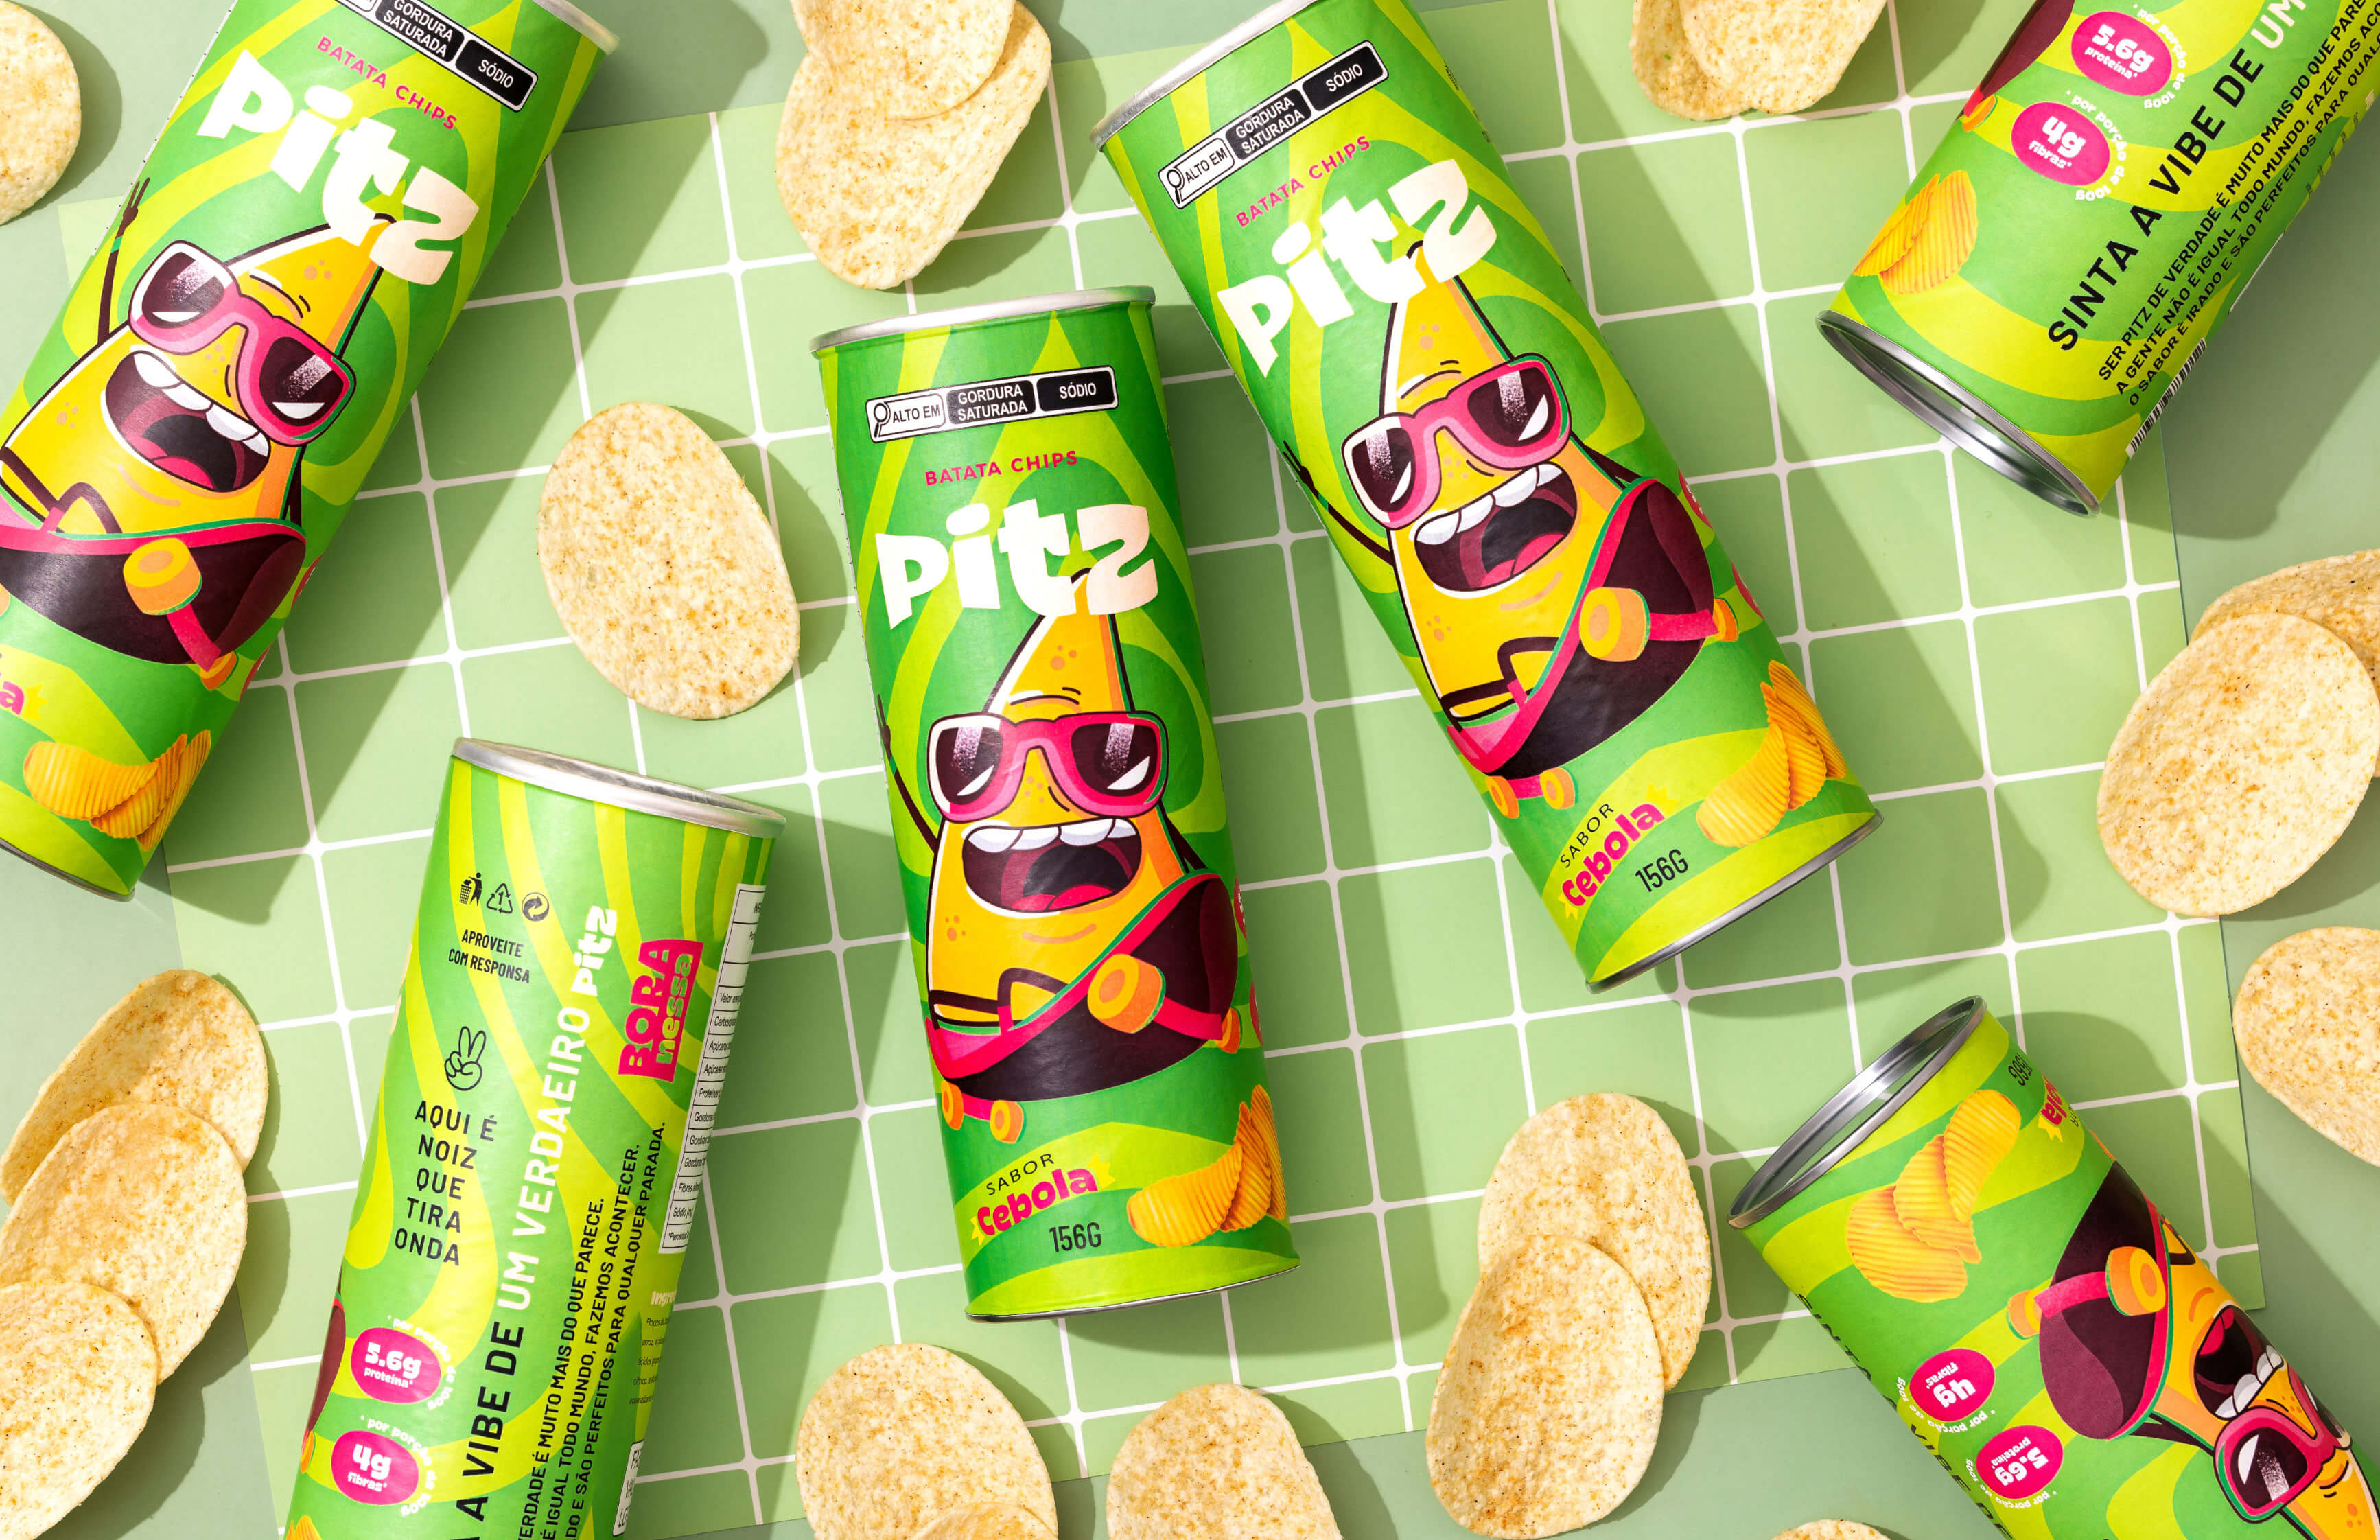 Colorful and Vibrant Brand Design for Pitz Potato Snacks